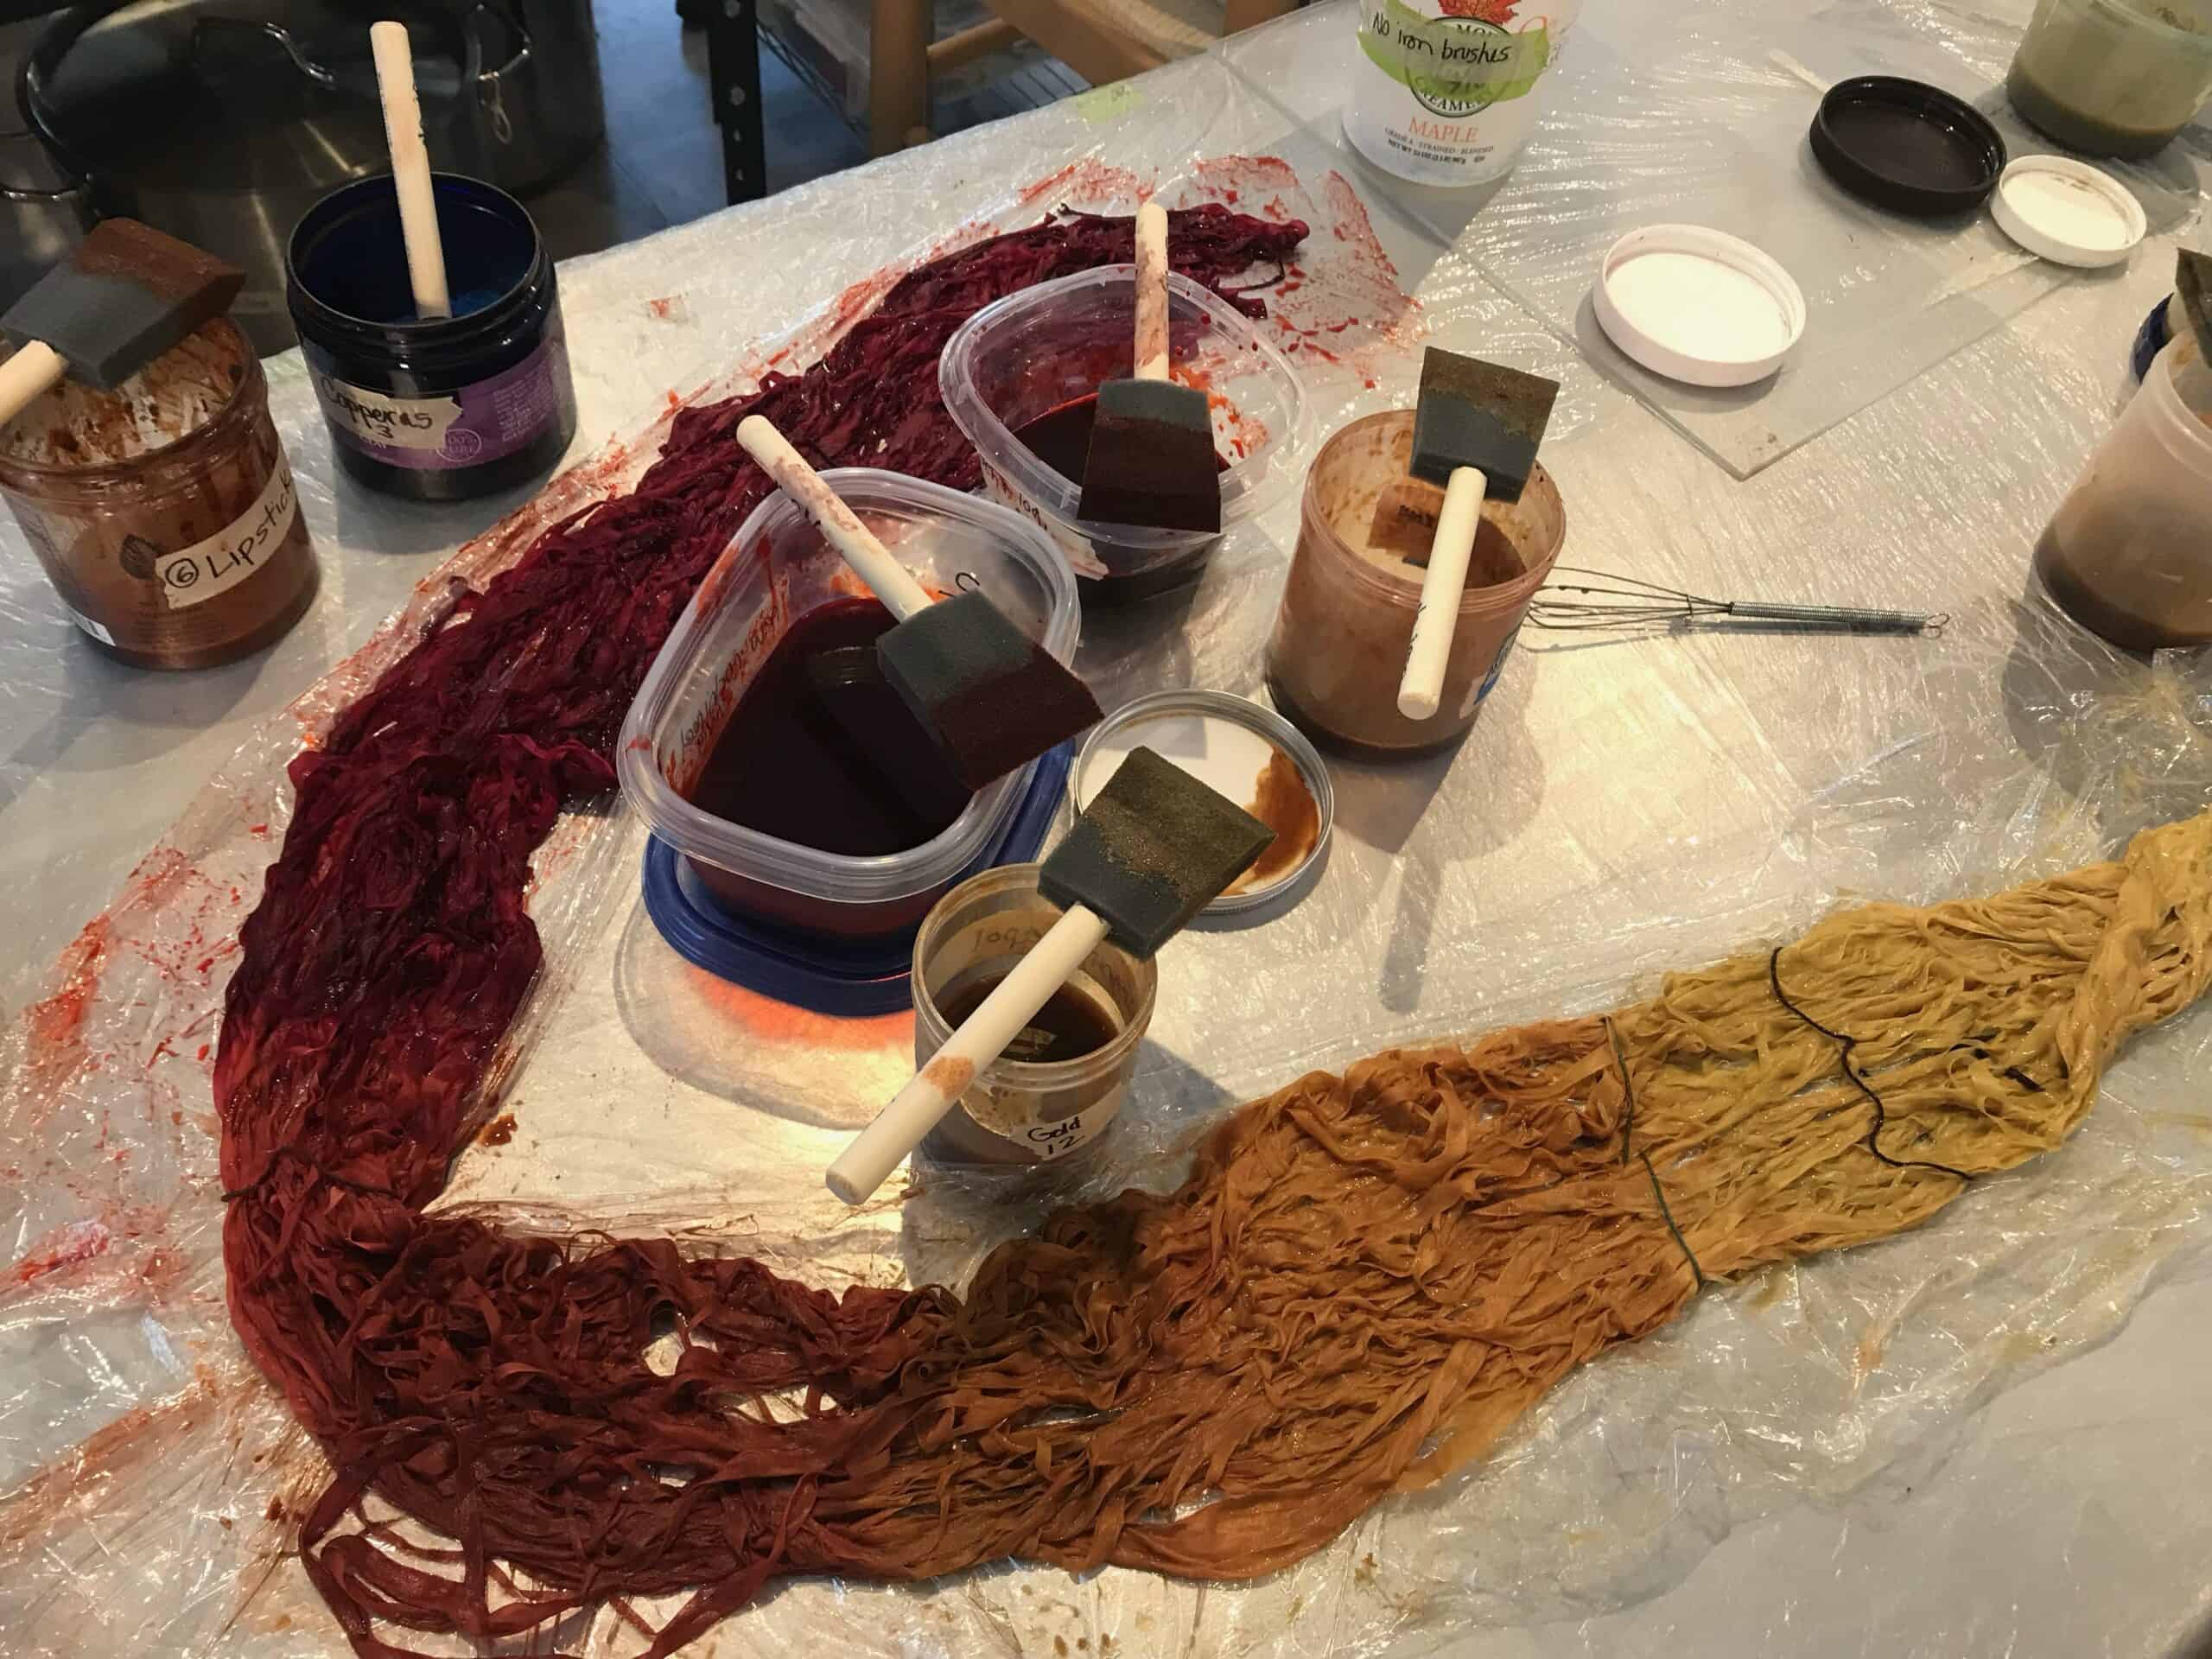 Dyeing Yarns with Mordant Dyes and Indigo - Sanborn Mills Farm